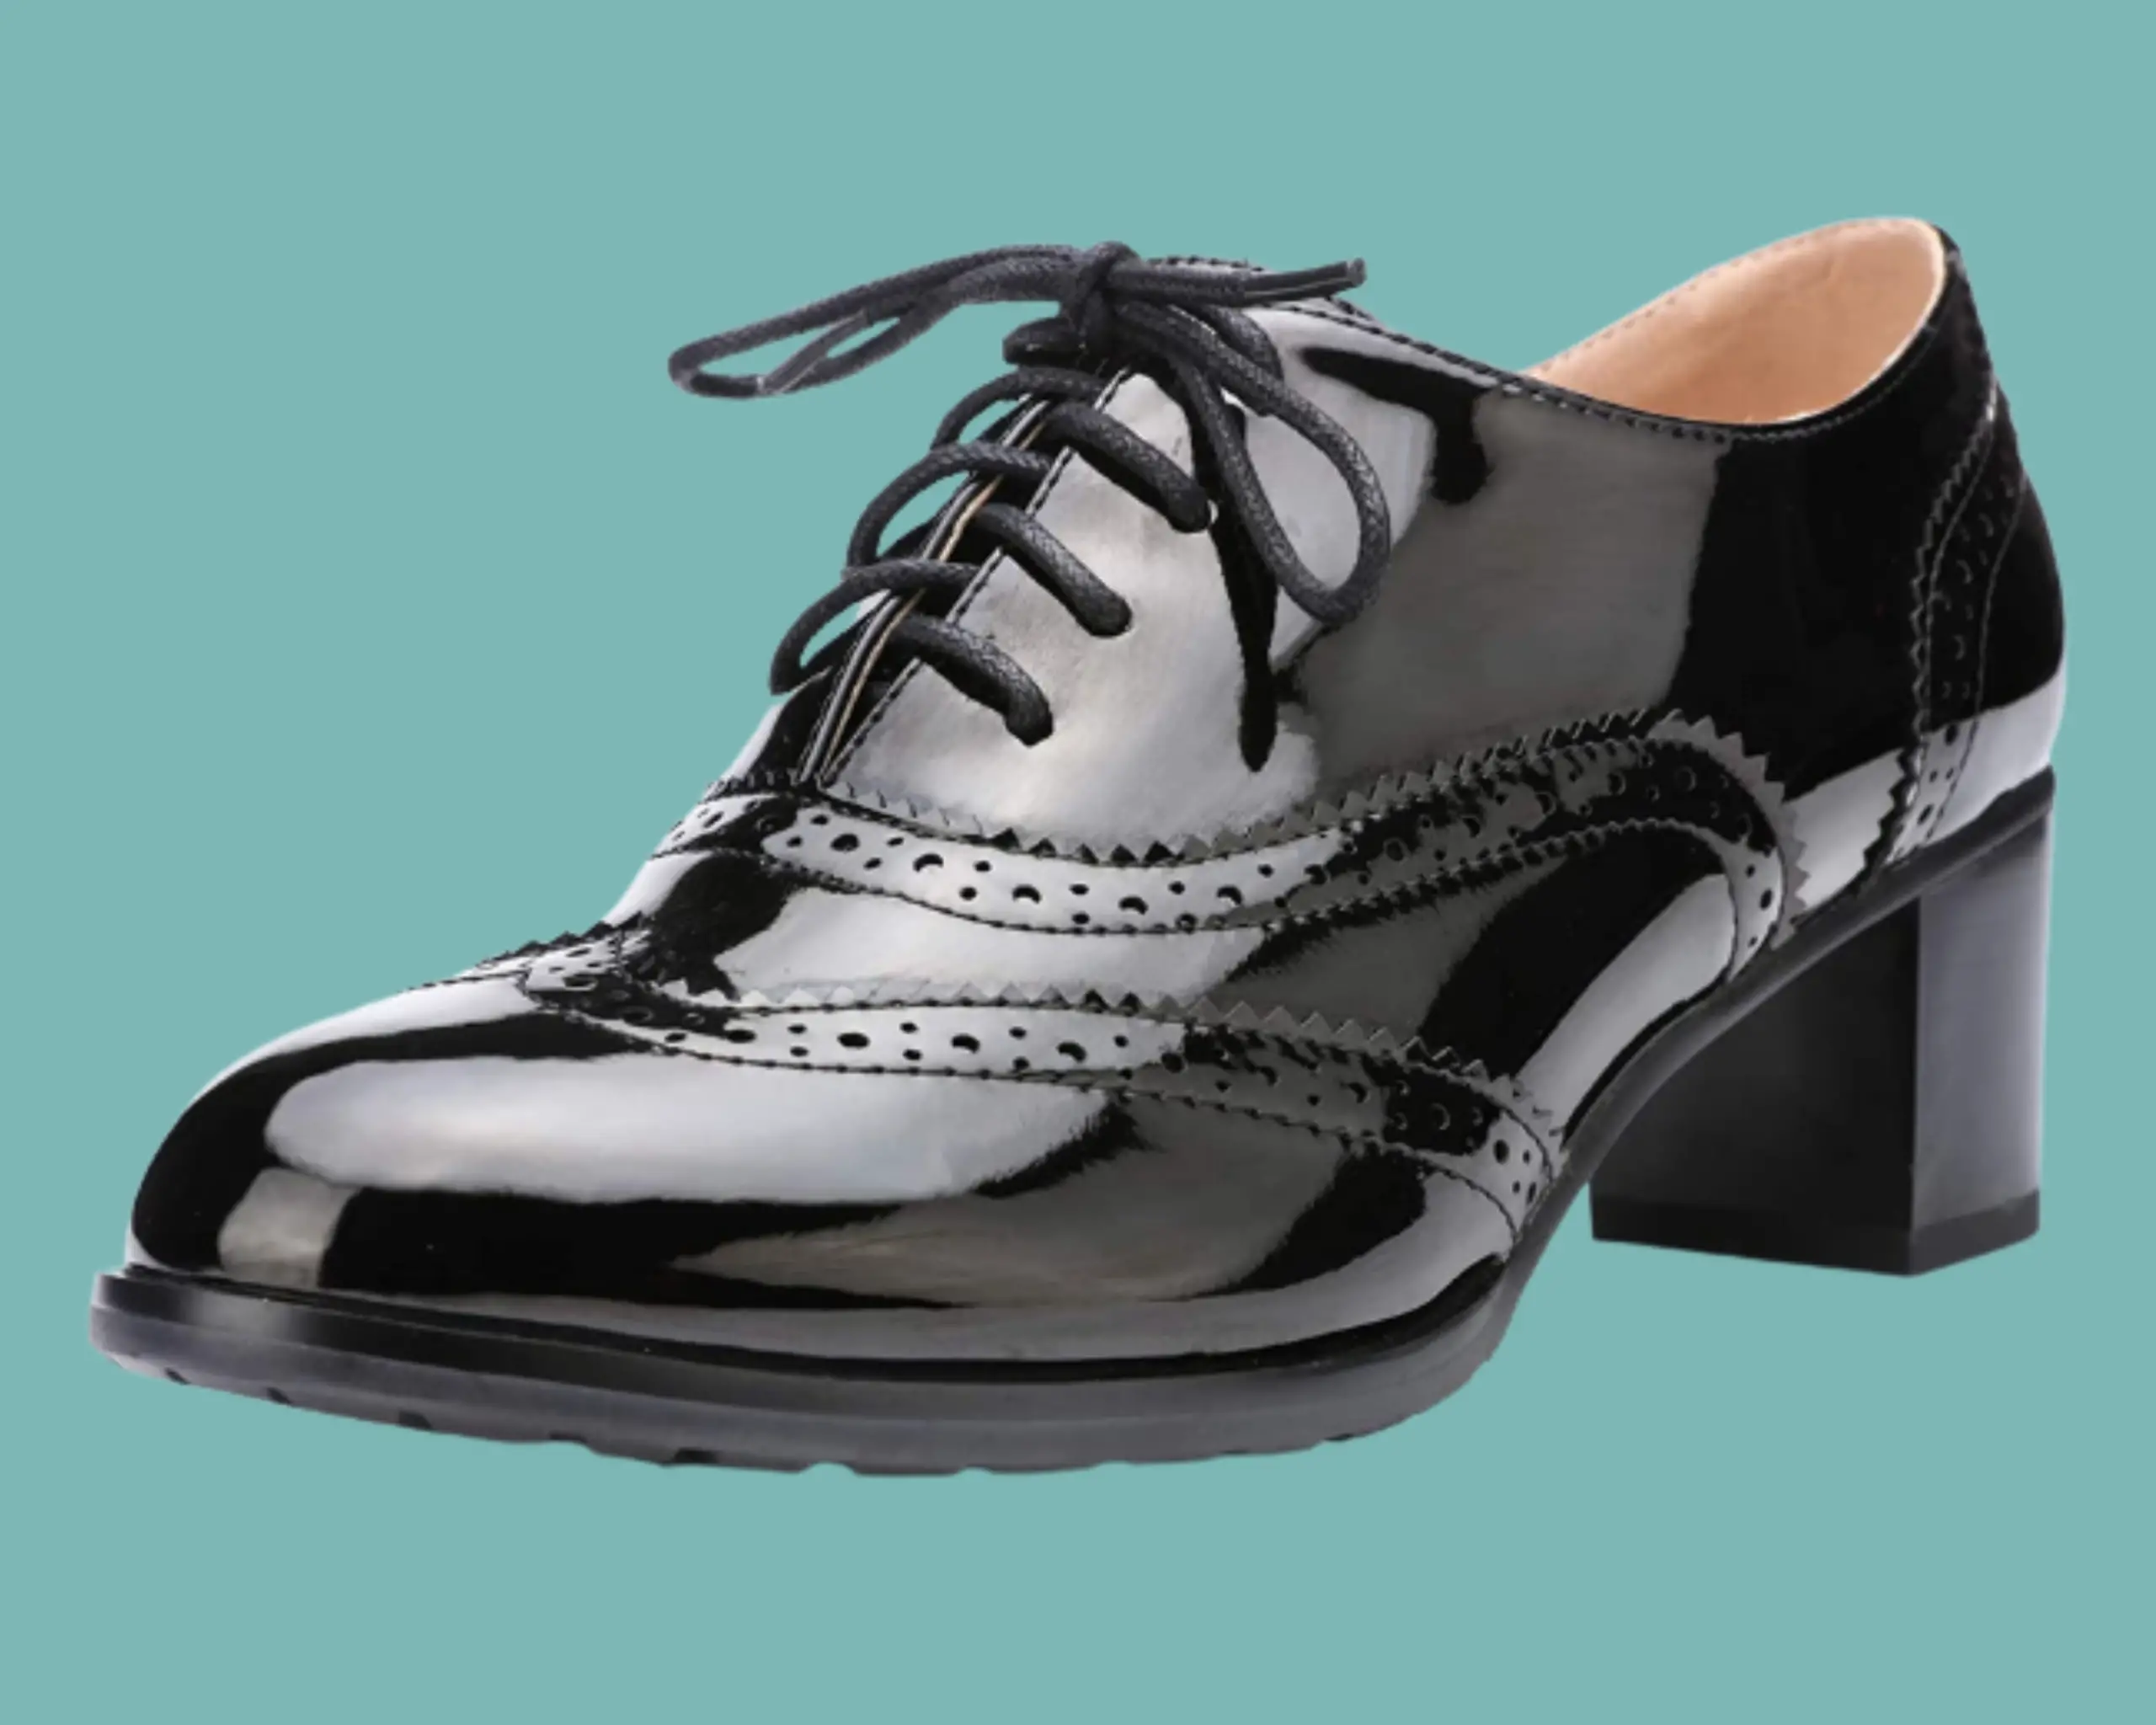 Comfortable heel Oxford shoe for women